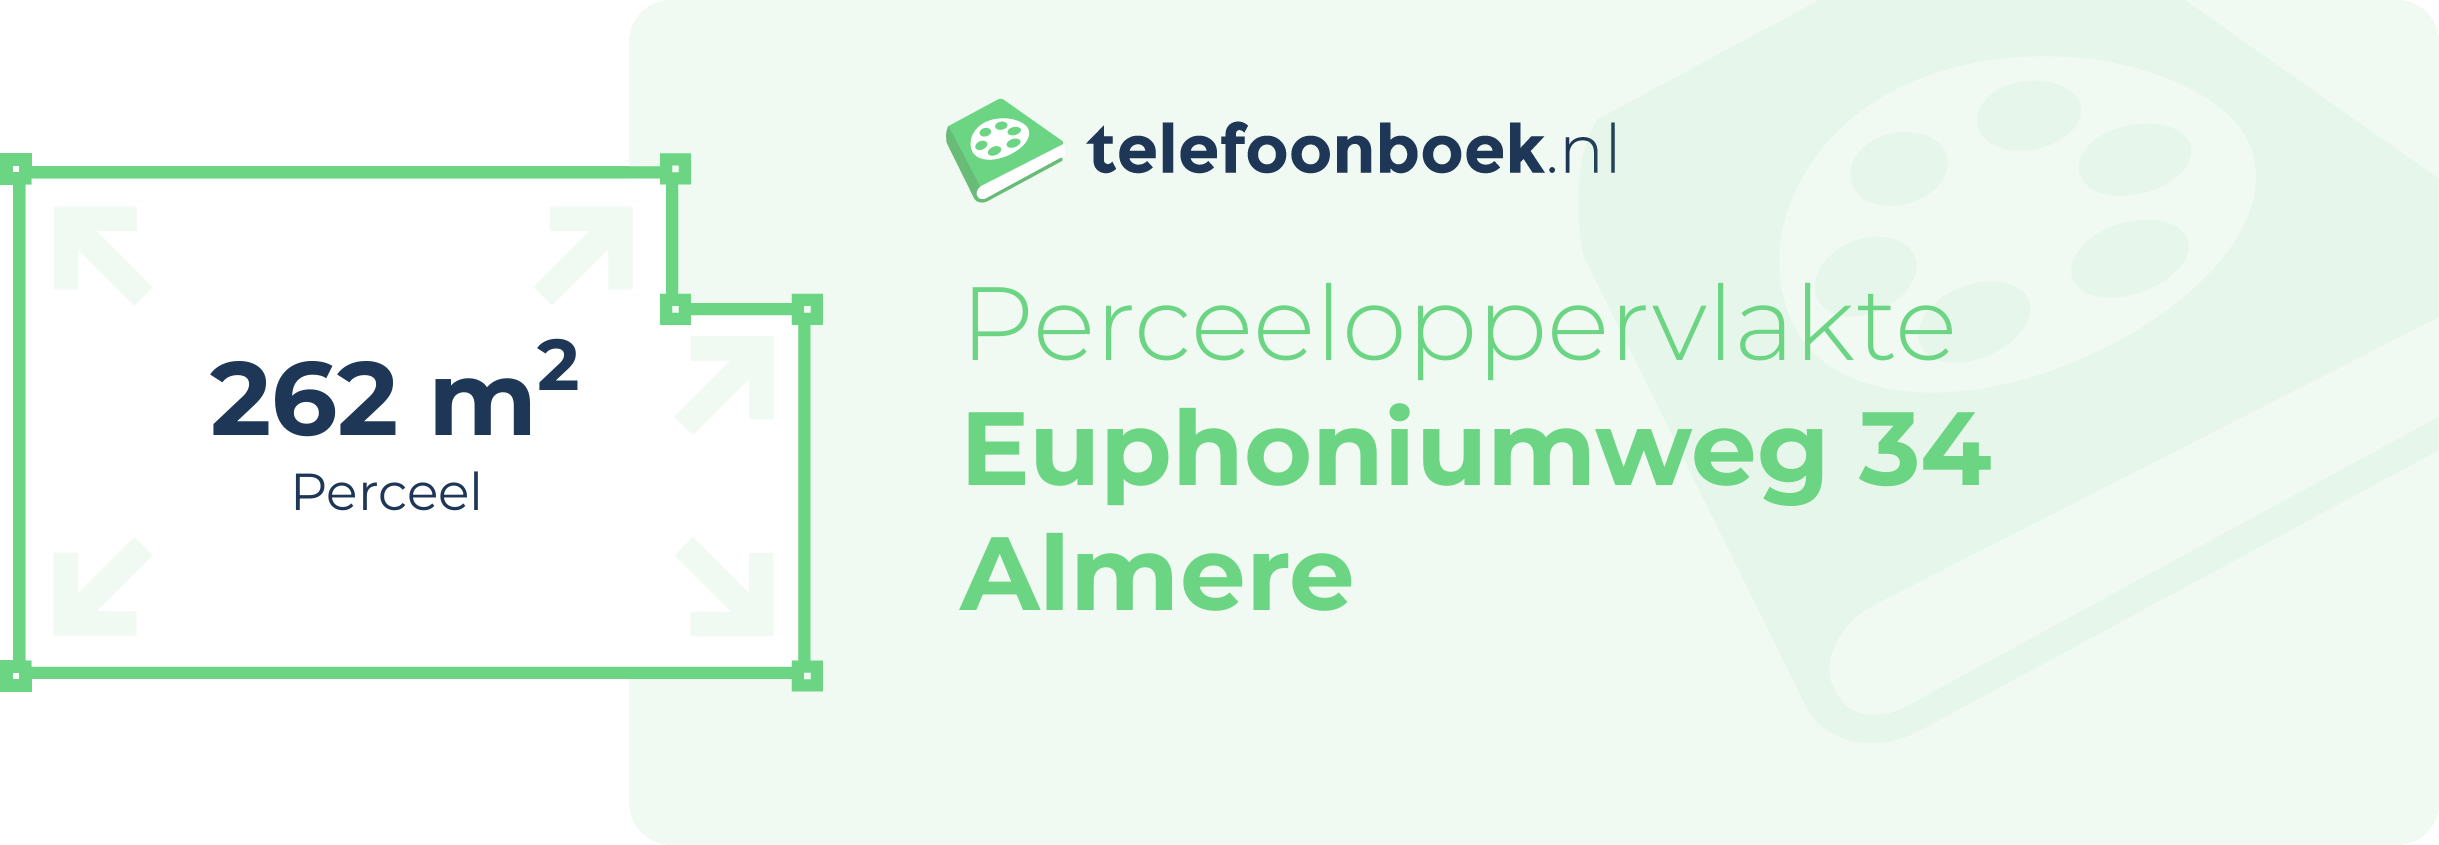 Perceeloppervlakte Euphoniumweg 34 Almere